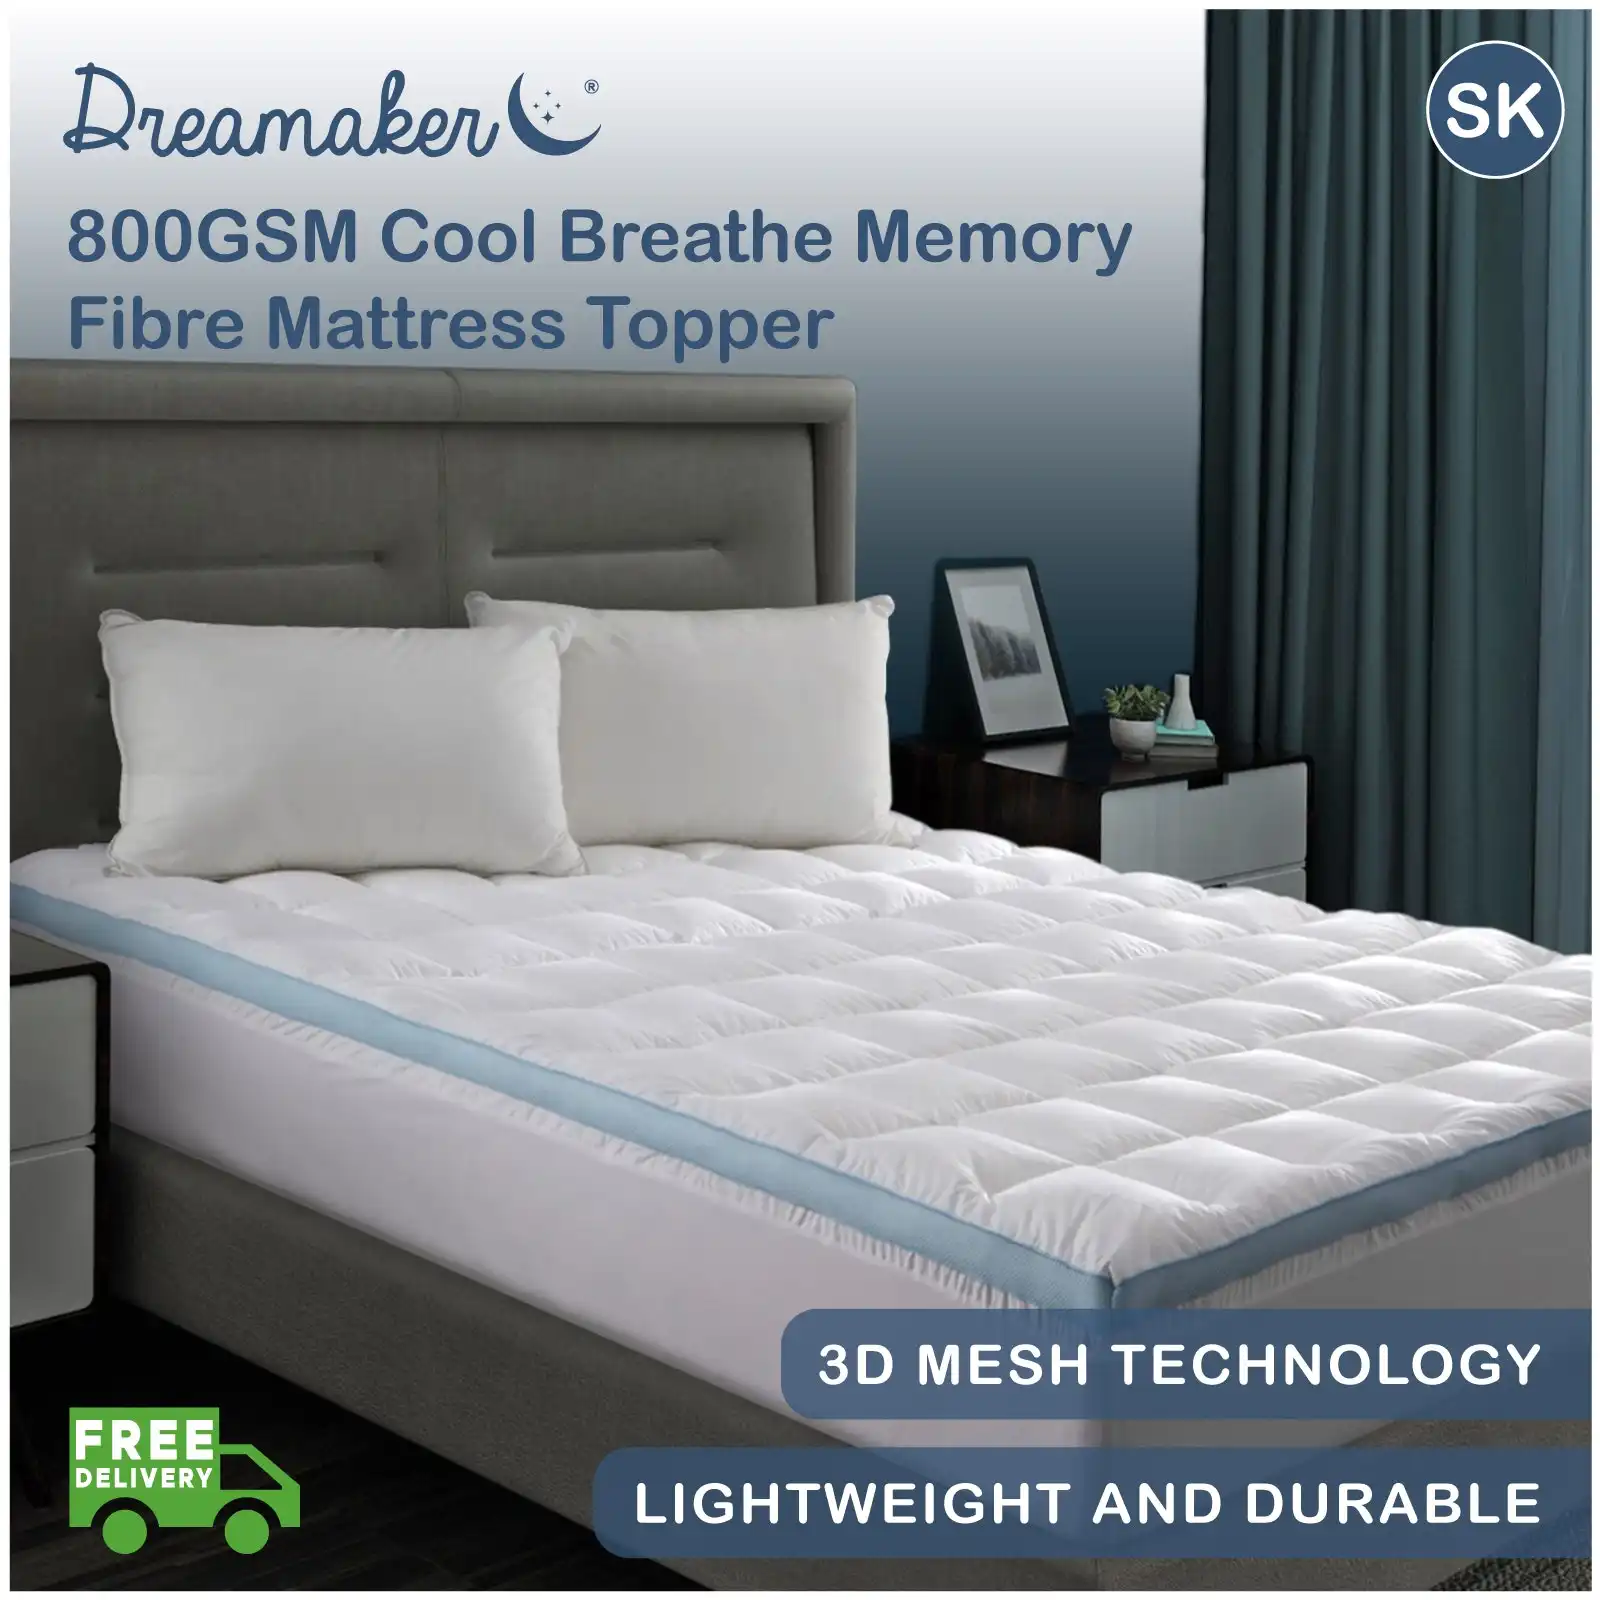 Dreamaker 800Gsm Cool Breathe Memory Fibre Mattress Topper - Super King Bed